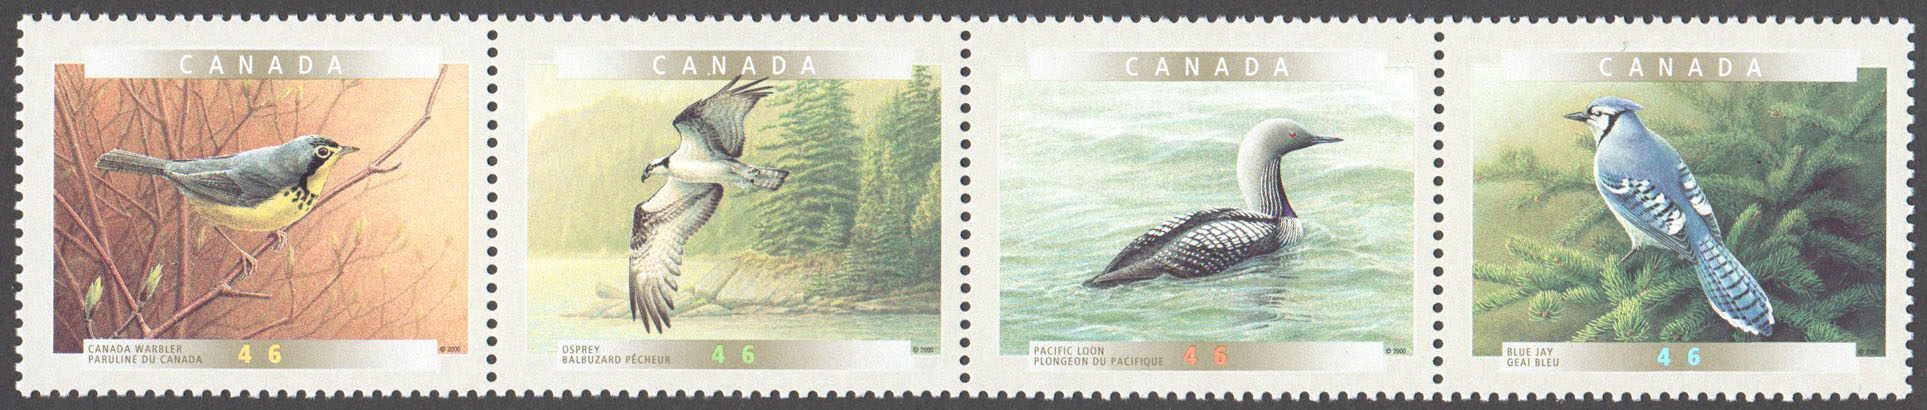 Canada Scott 1842a MNH Strip (A7-1) - Click Image to Close